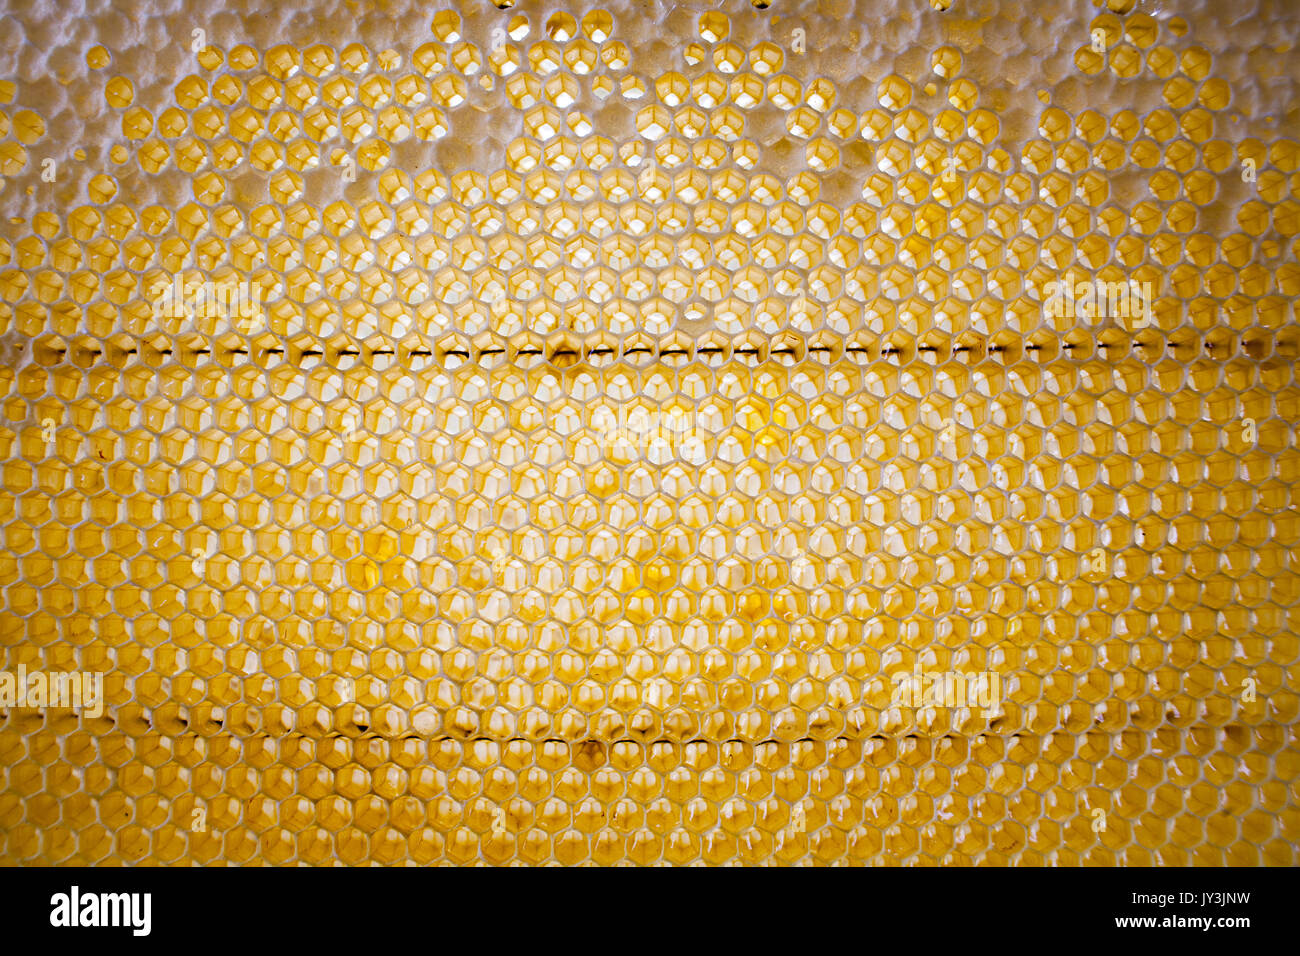 honey comb background or texture Stock Photo - Alamy